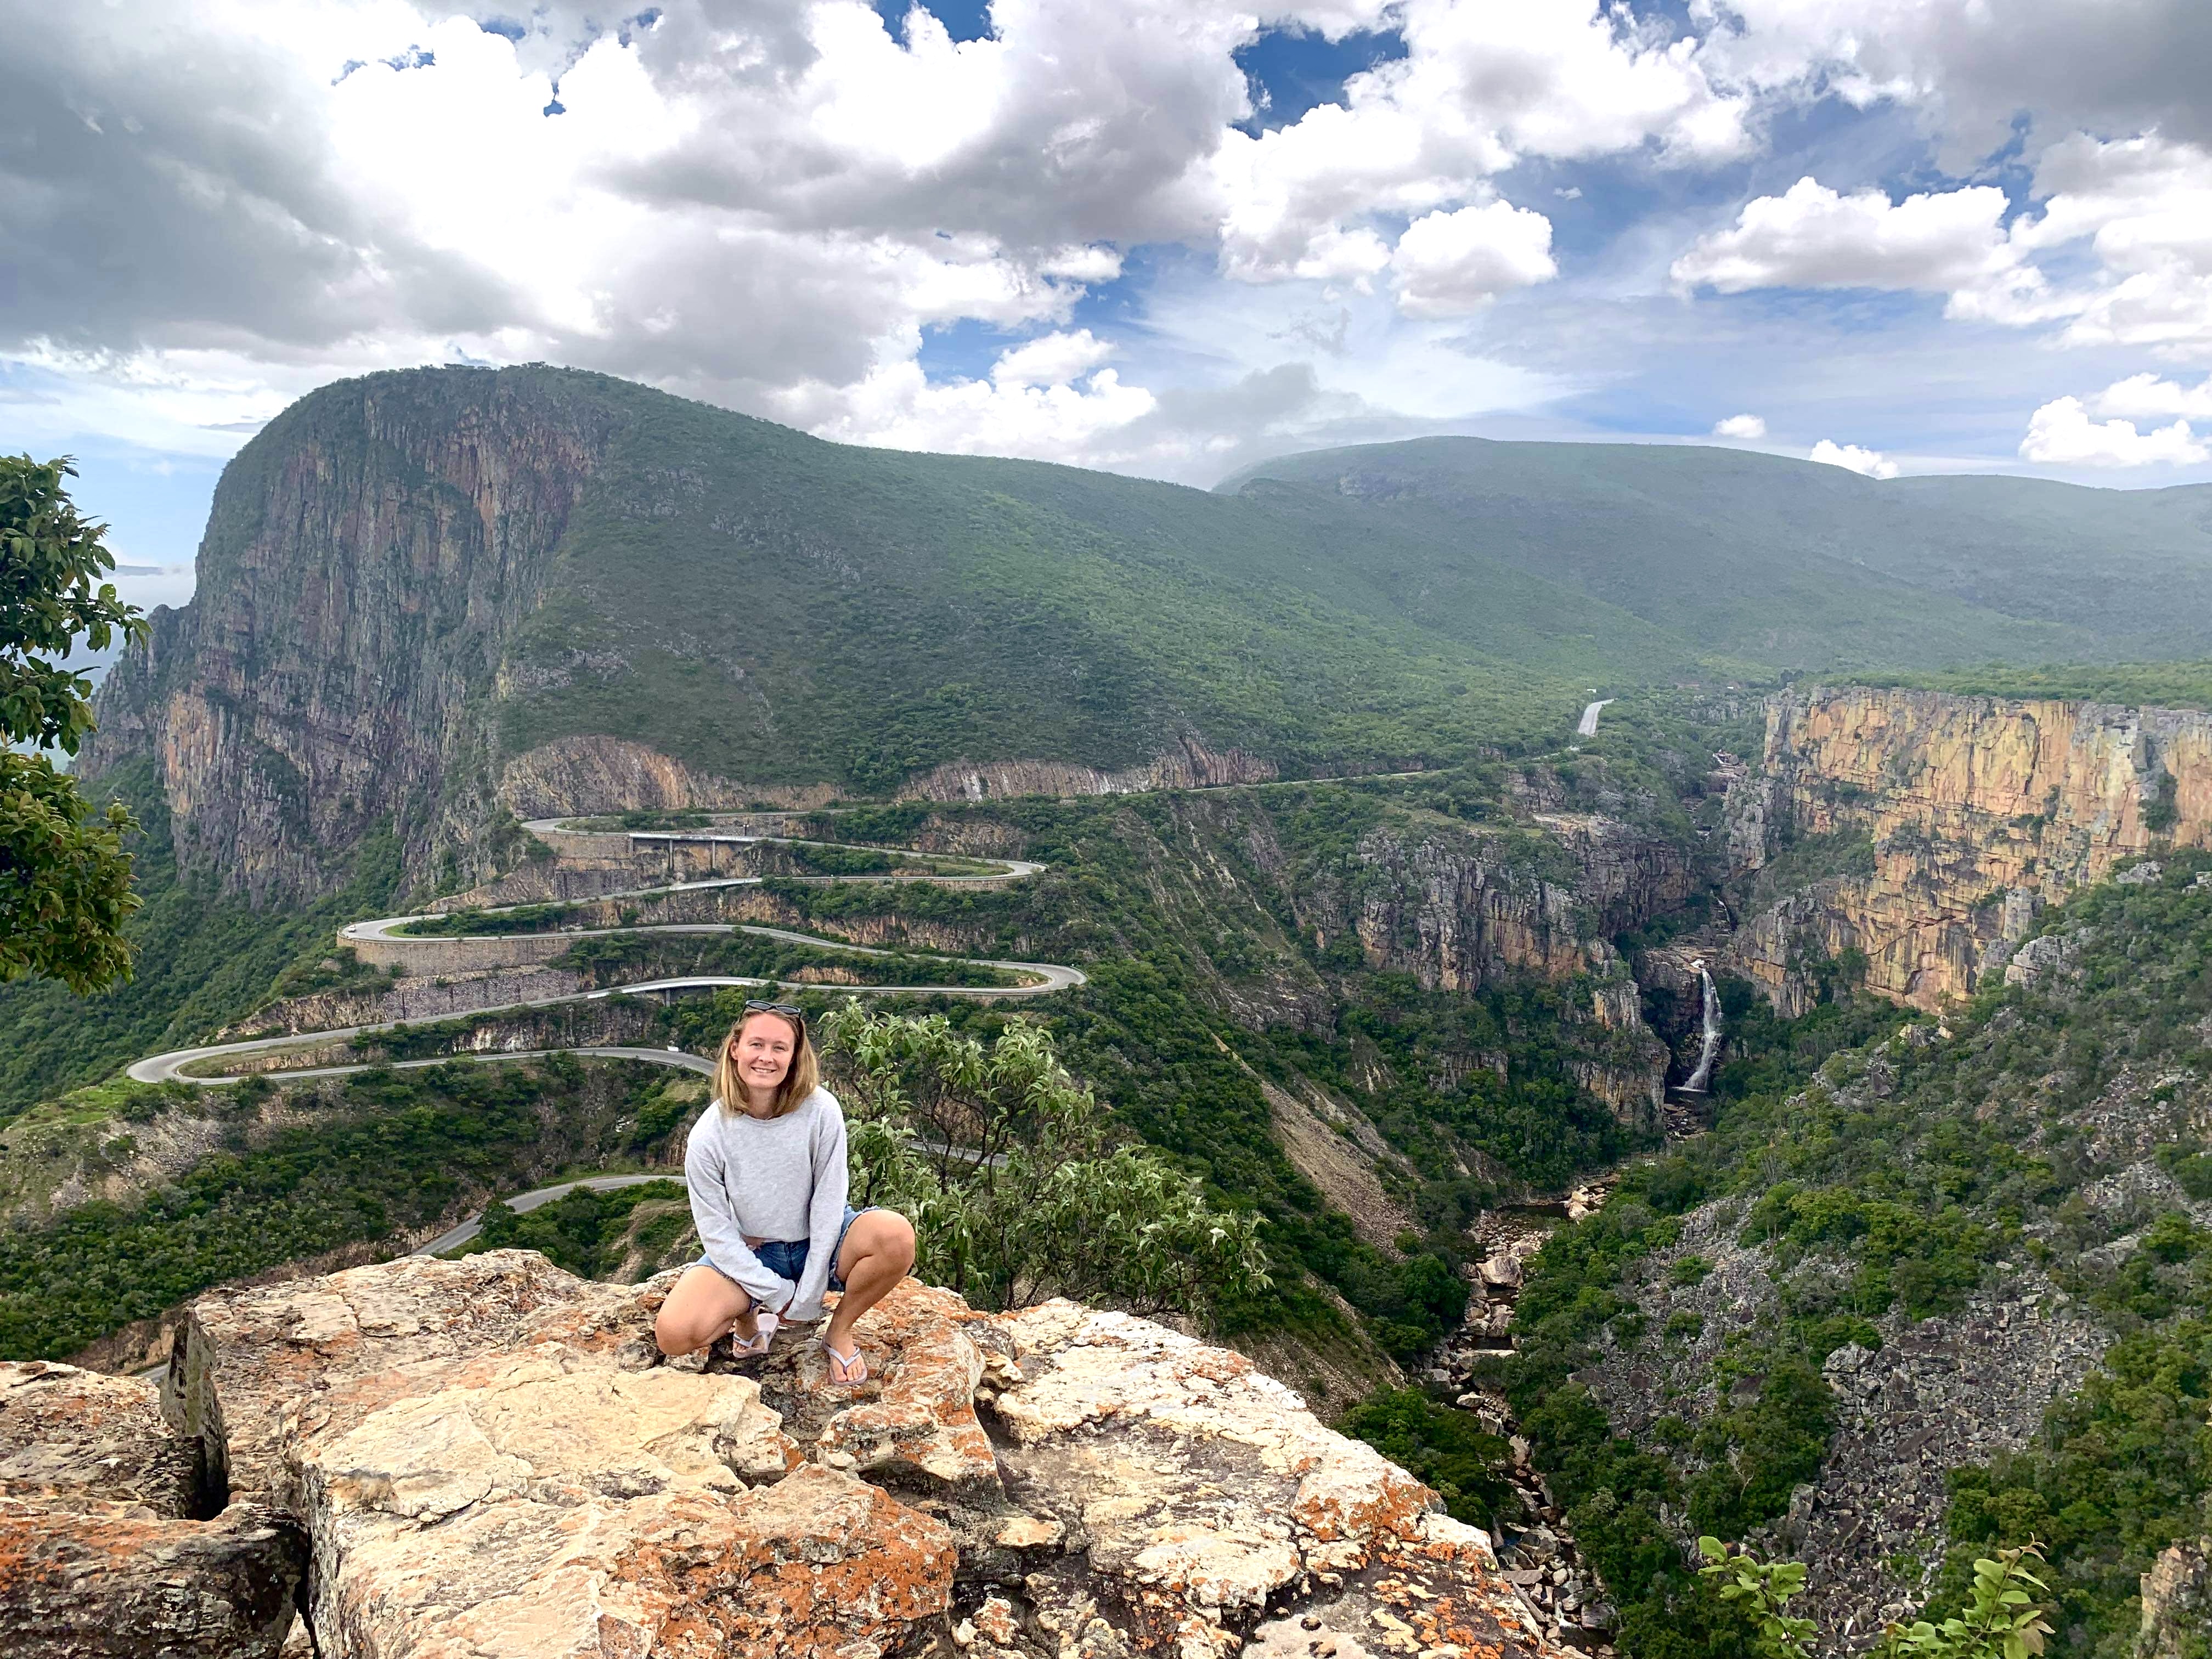 Signe Schjøtt during her visit to the beautiful mountain range Serra da Leba in Angola.